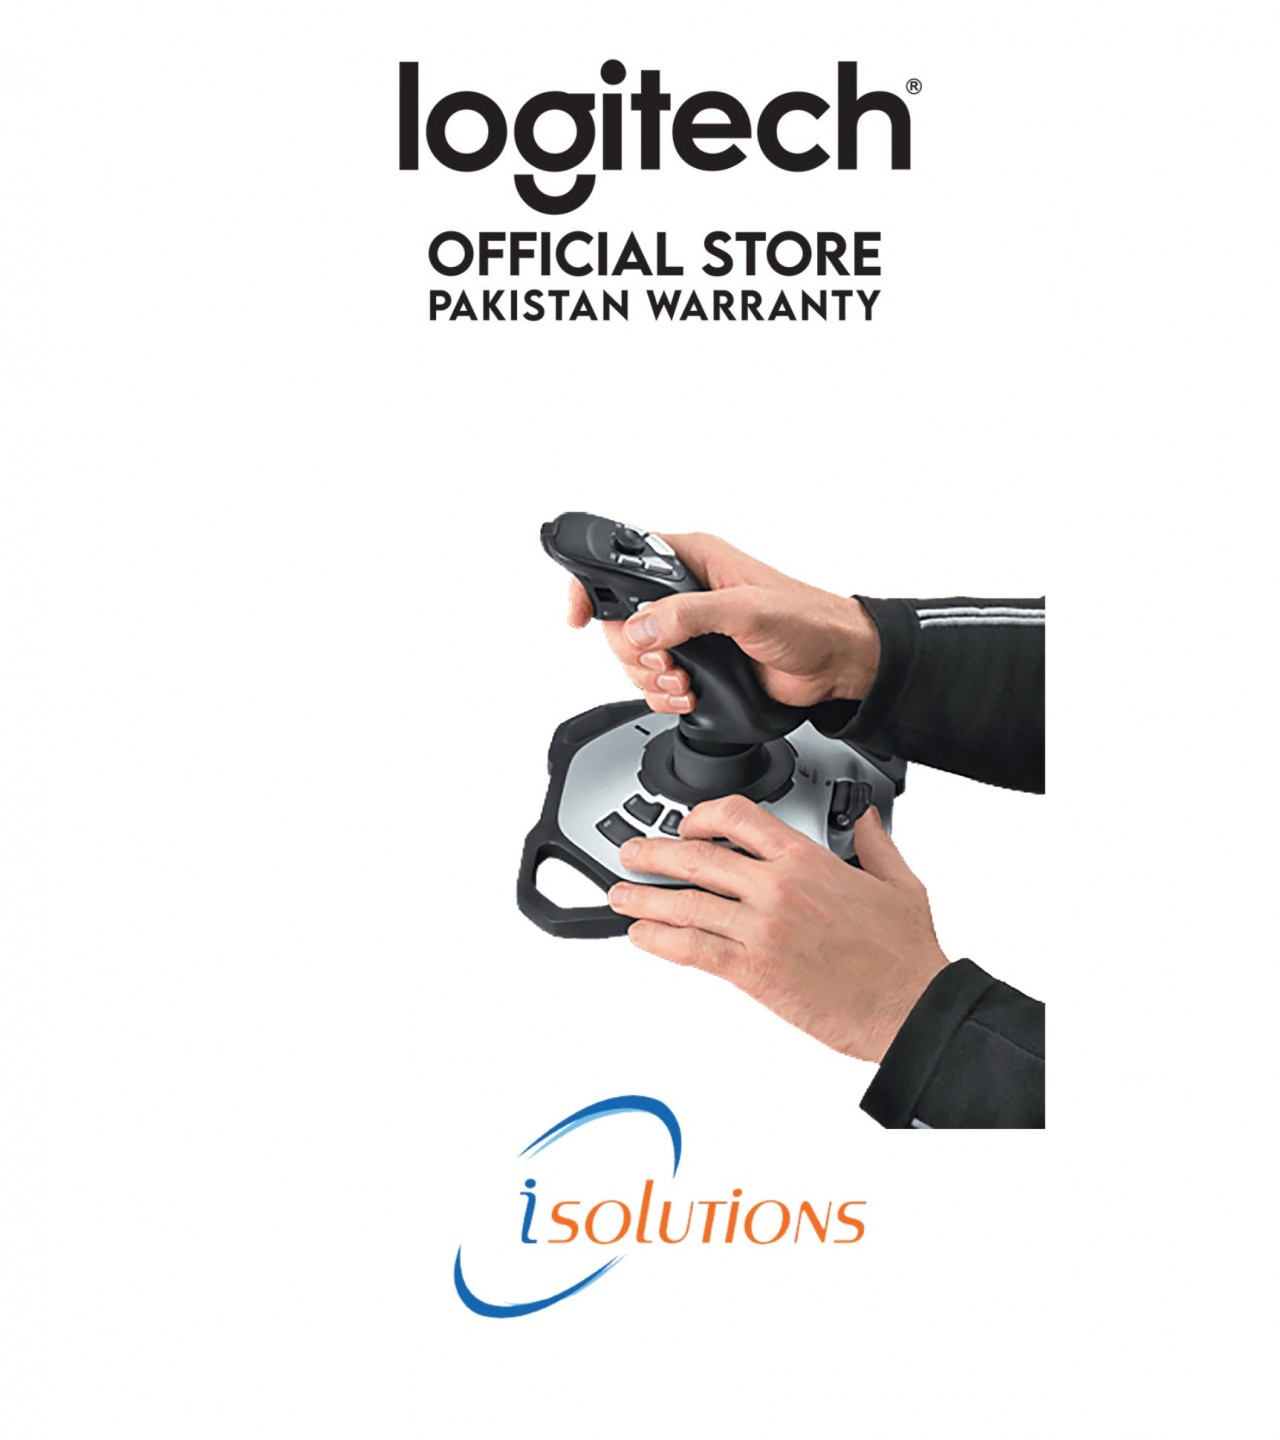 Extreme 3D Pro Joystick - Logitech Pakistan